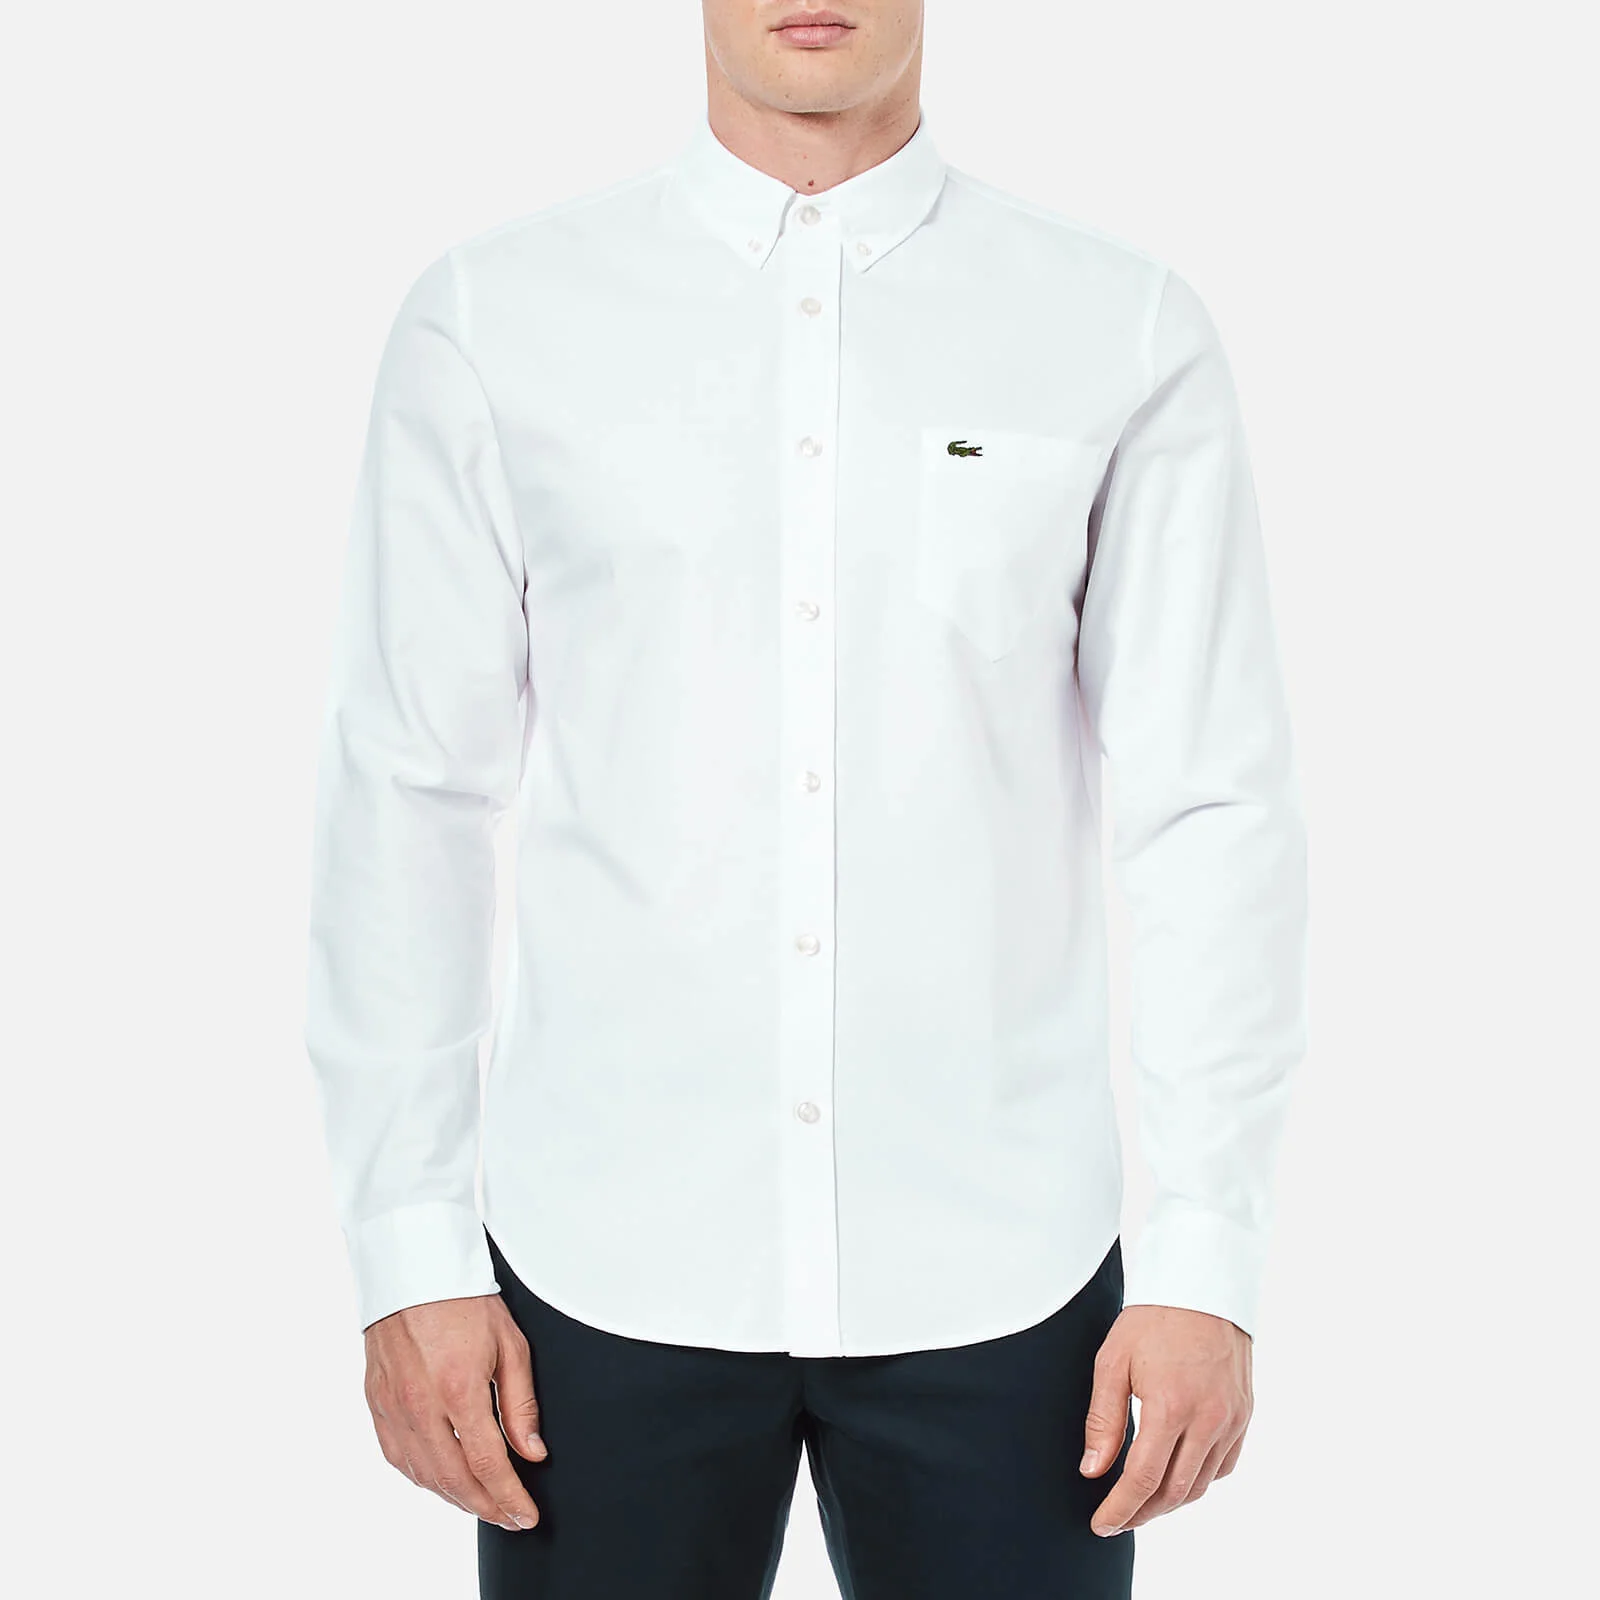 Lacoste Men's Oxford Long Sleeve Shirt - White Image 1